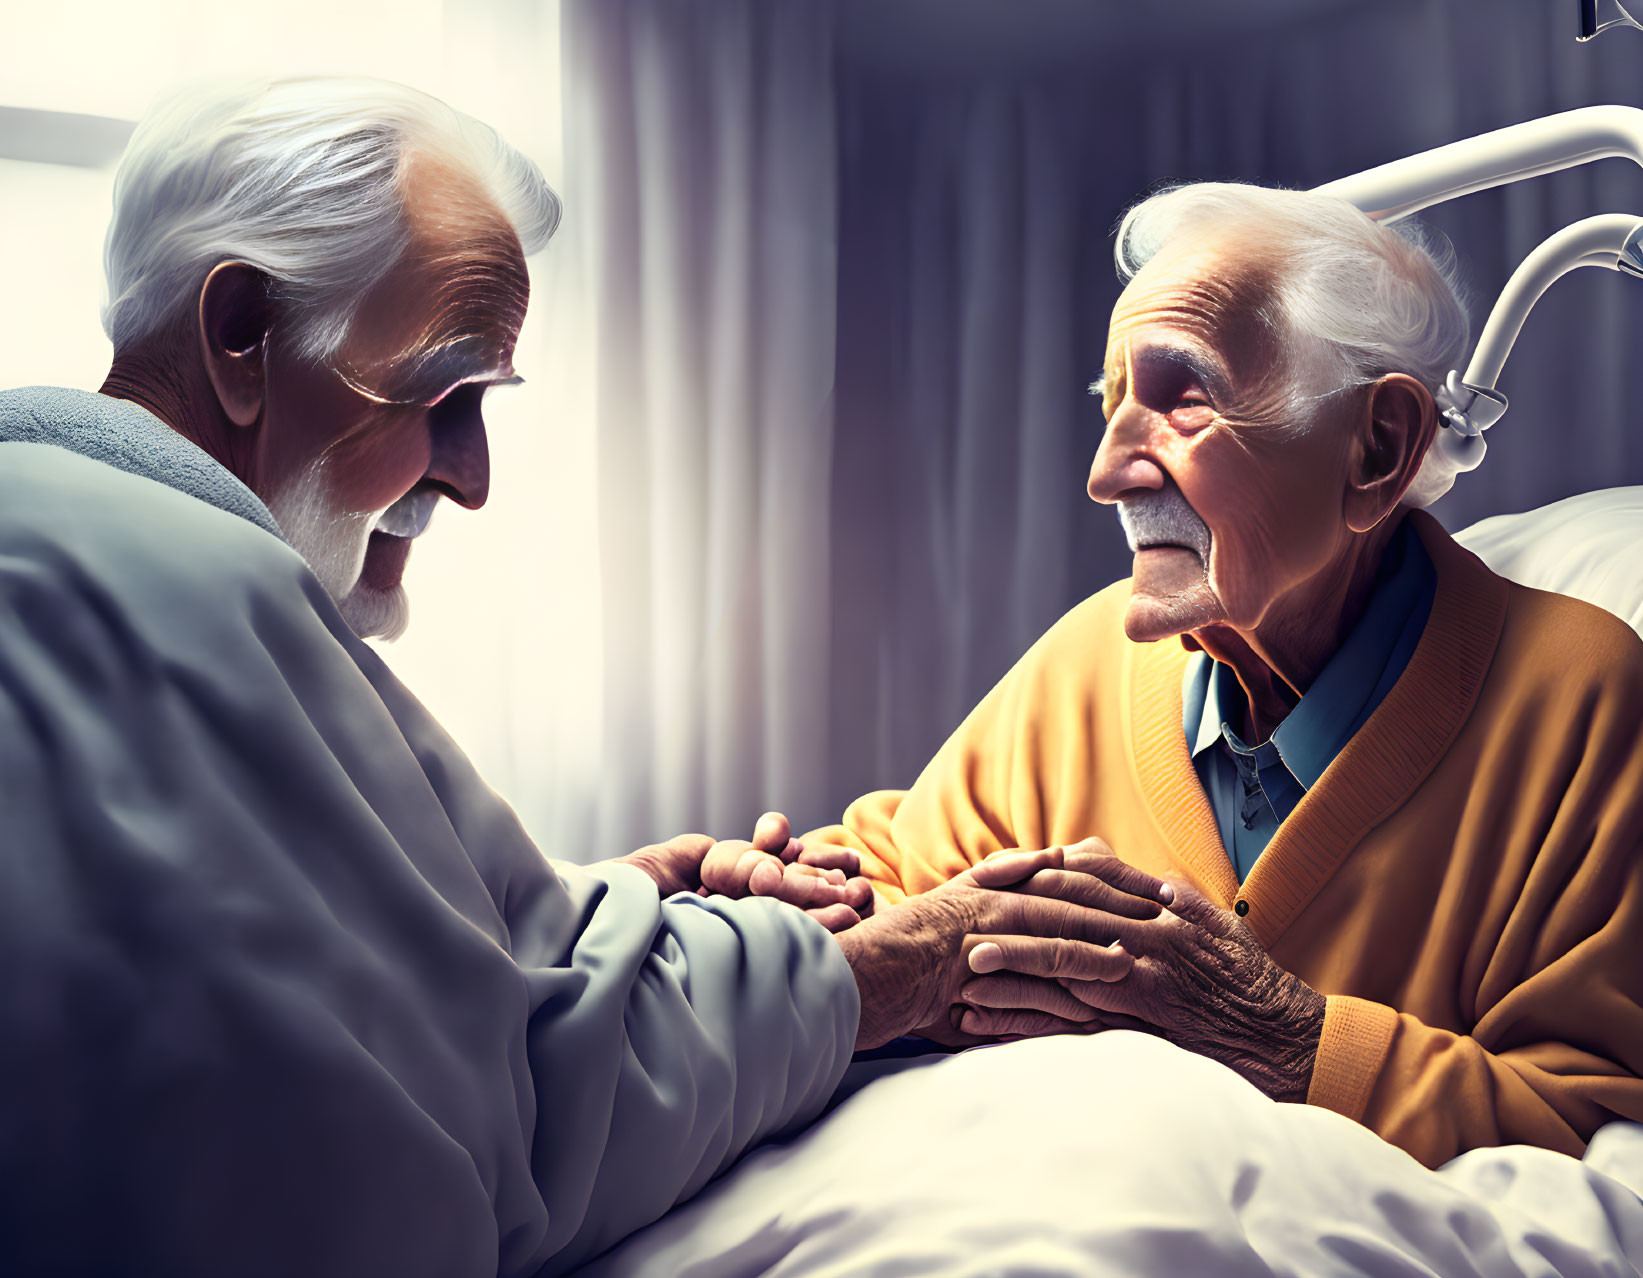 Elderly men sharing a heartwarming moment by the bedside